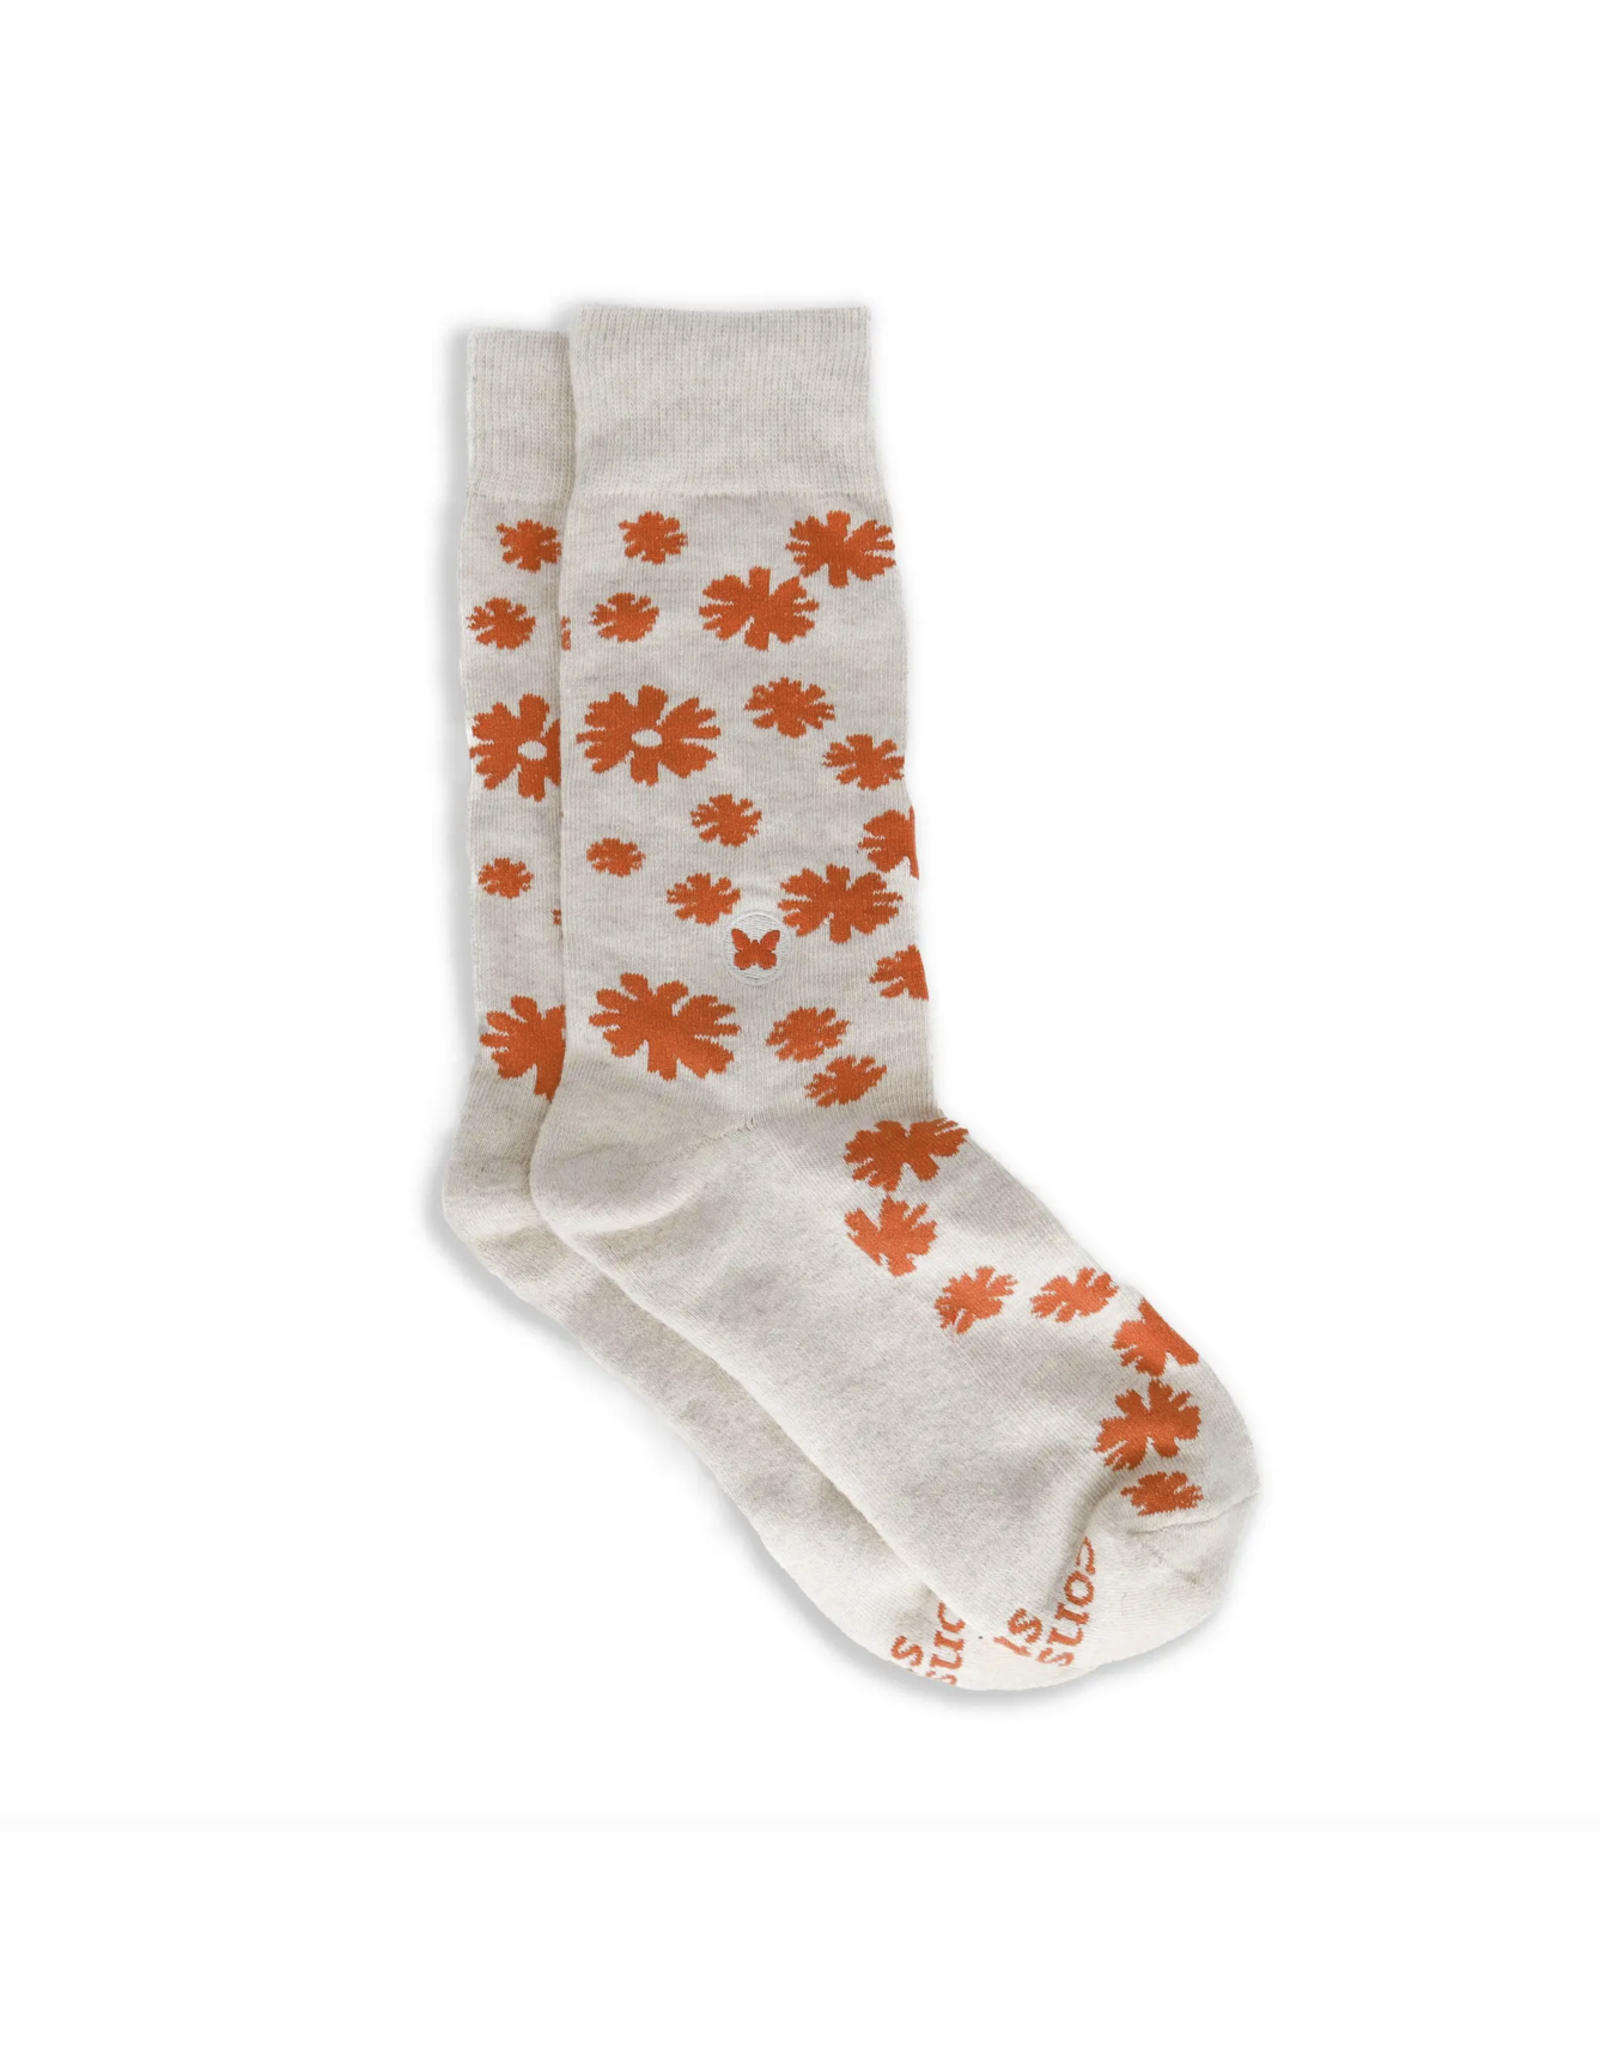 Socks That Stop Violence Against Women, Floral